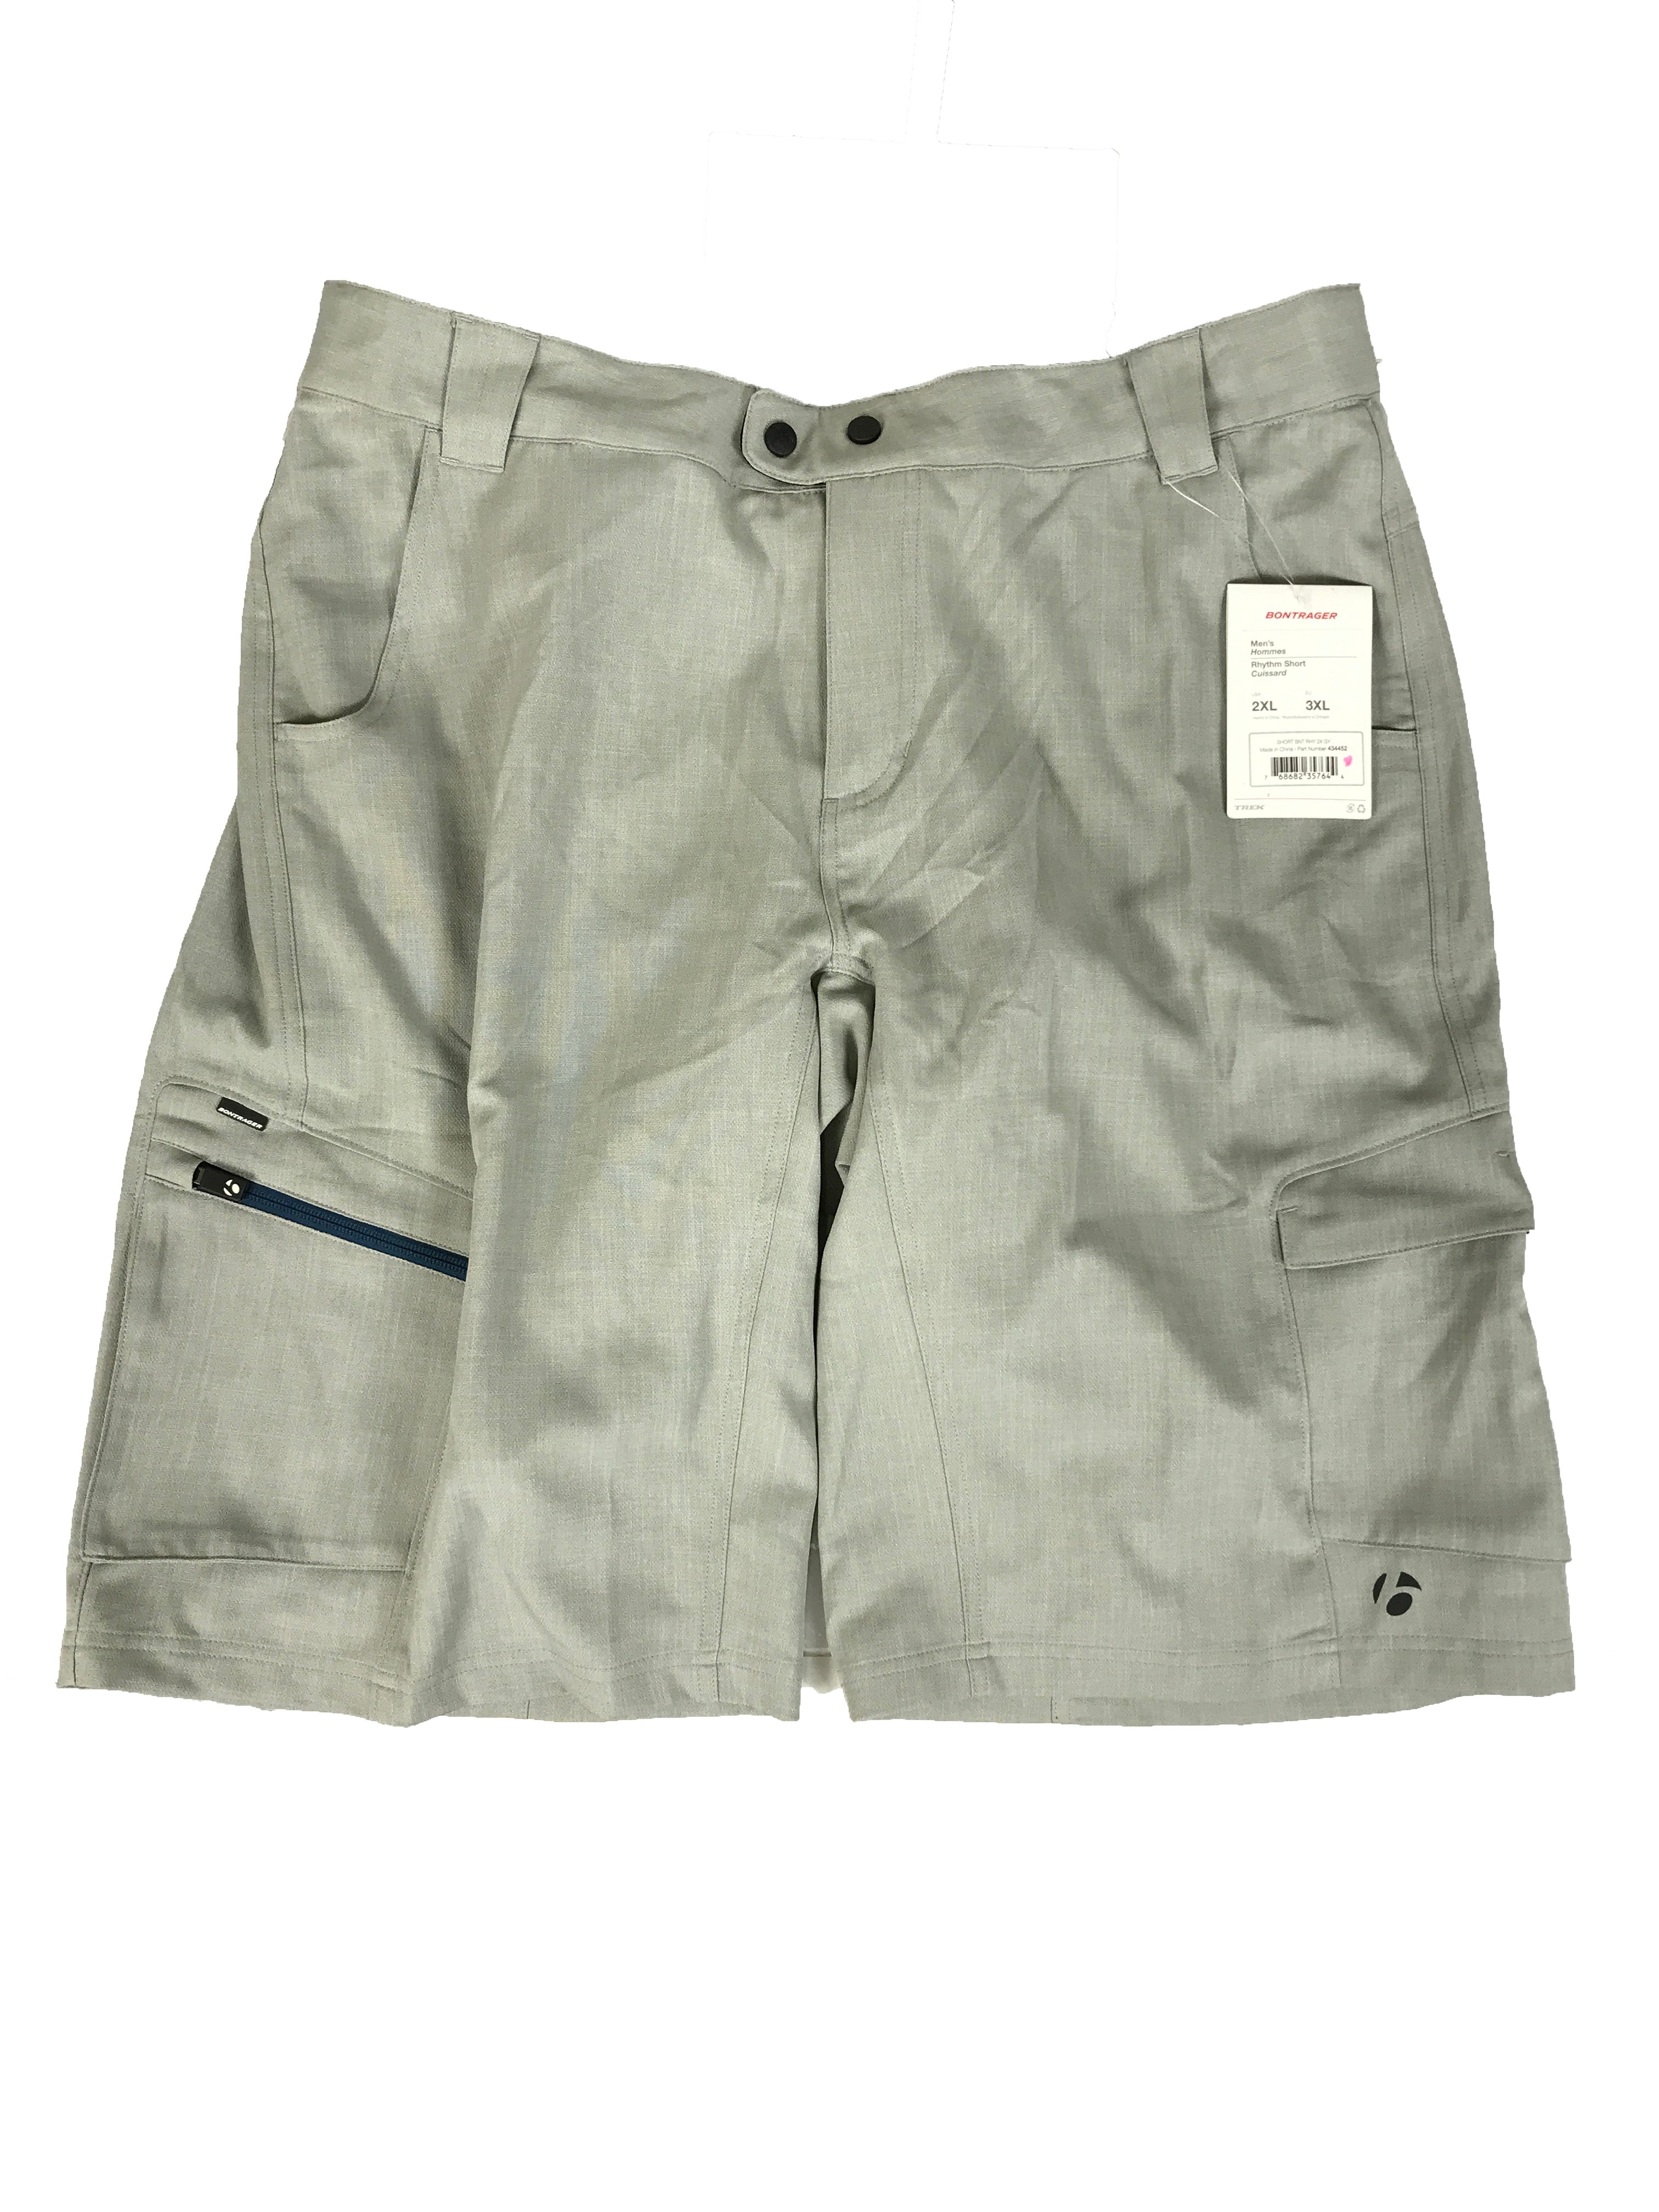 Bontrager Rhythm Gray Shorts with Solstice Chamois Men's Size 2XL NWT